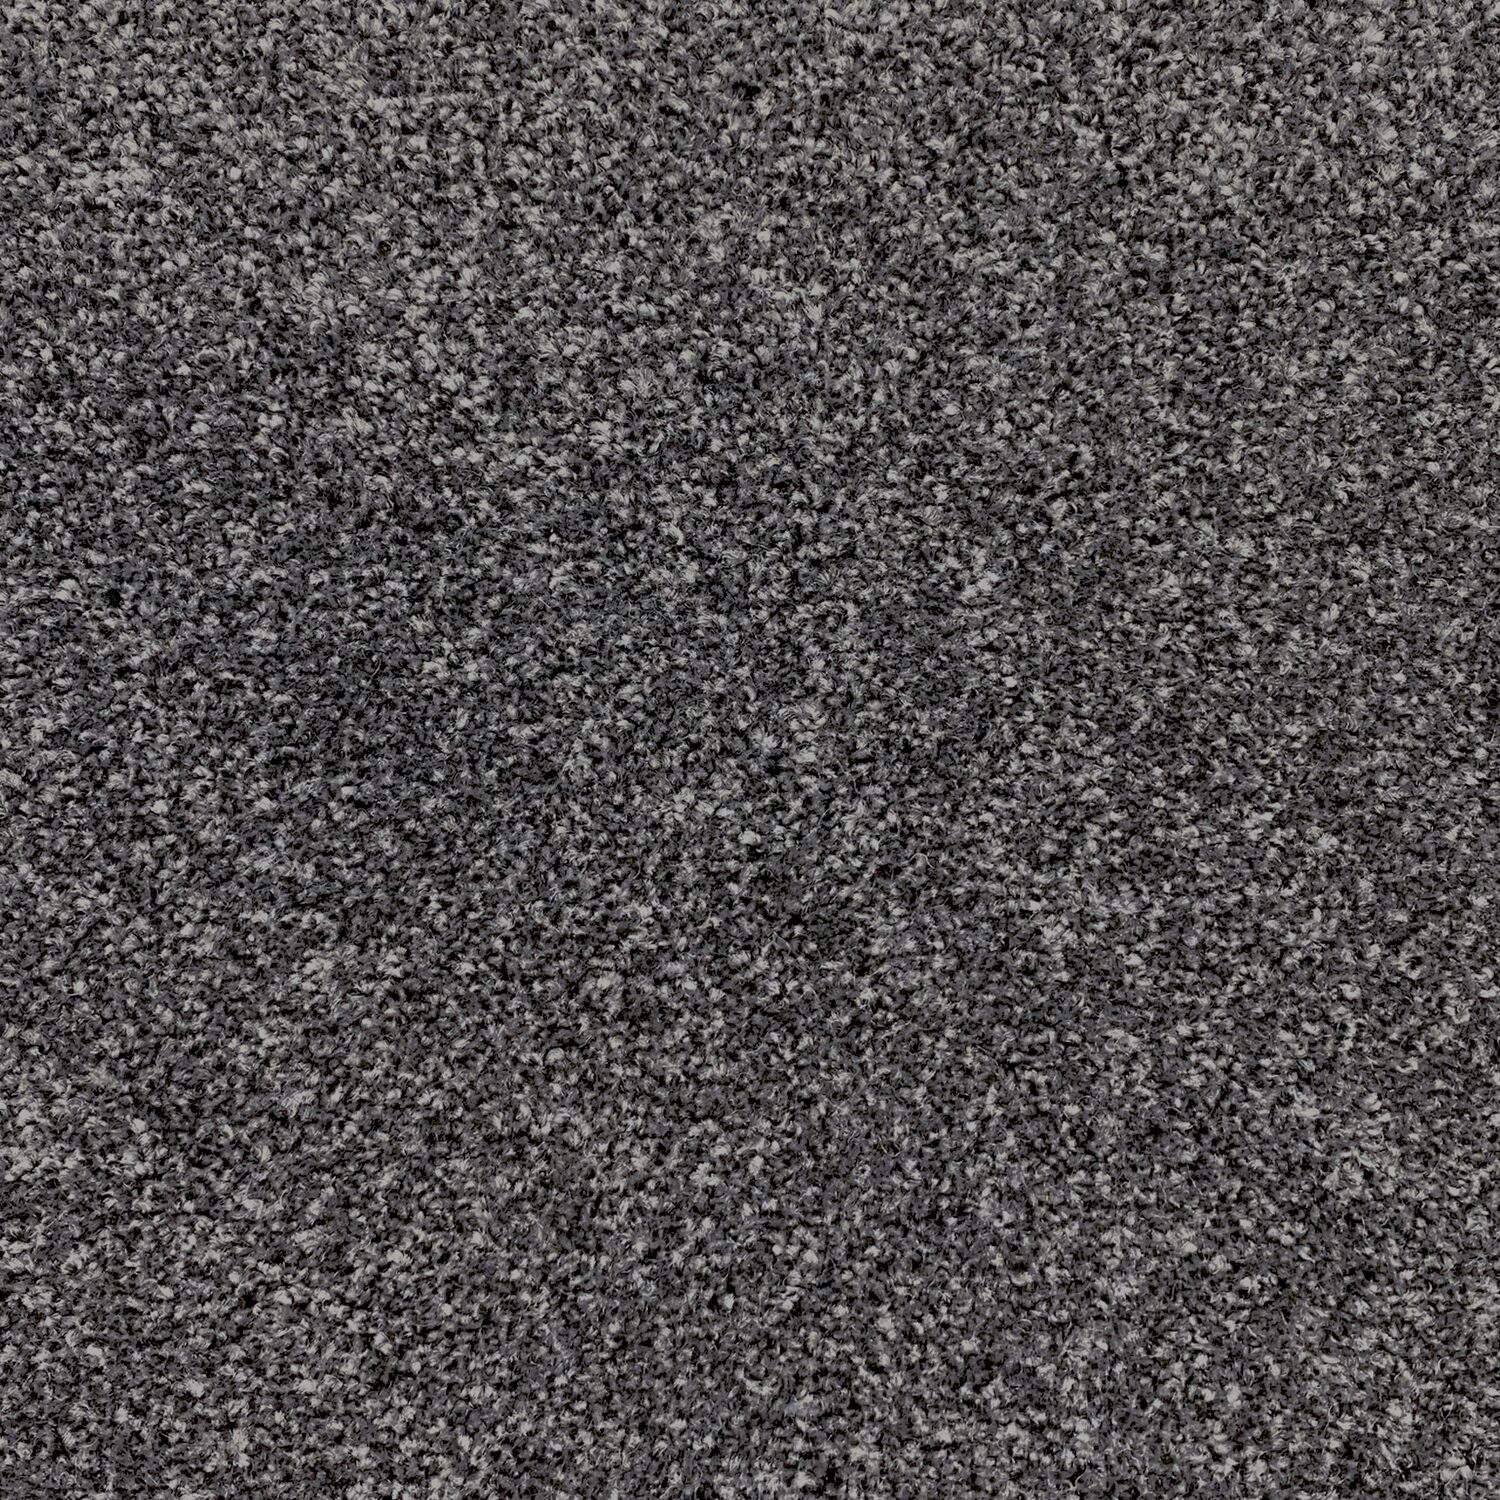 Carpet name: Smart Textures Raven